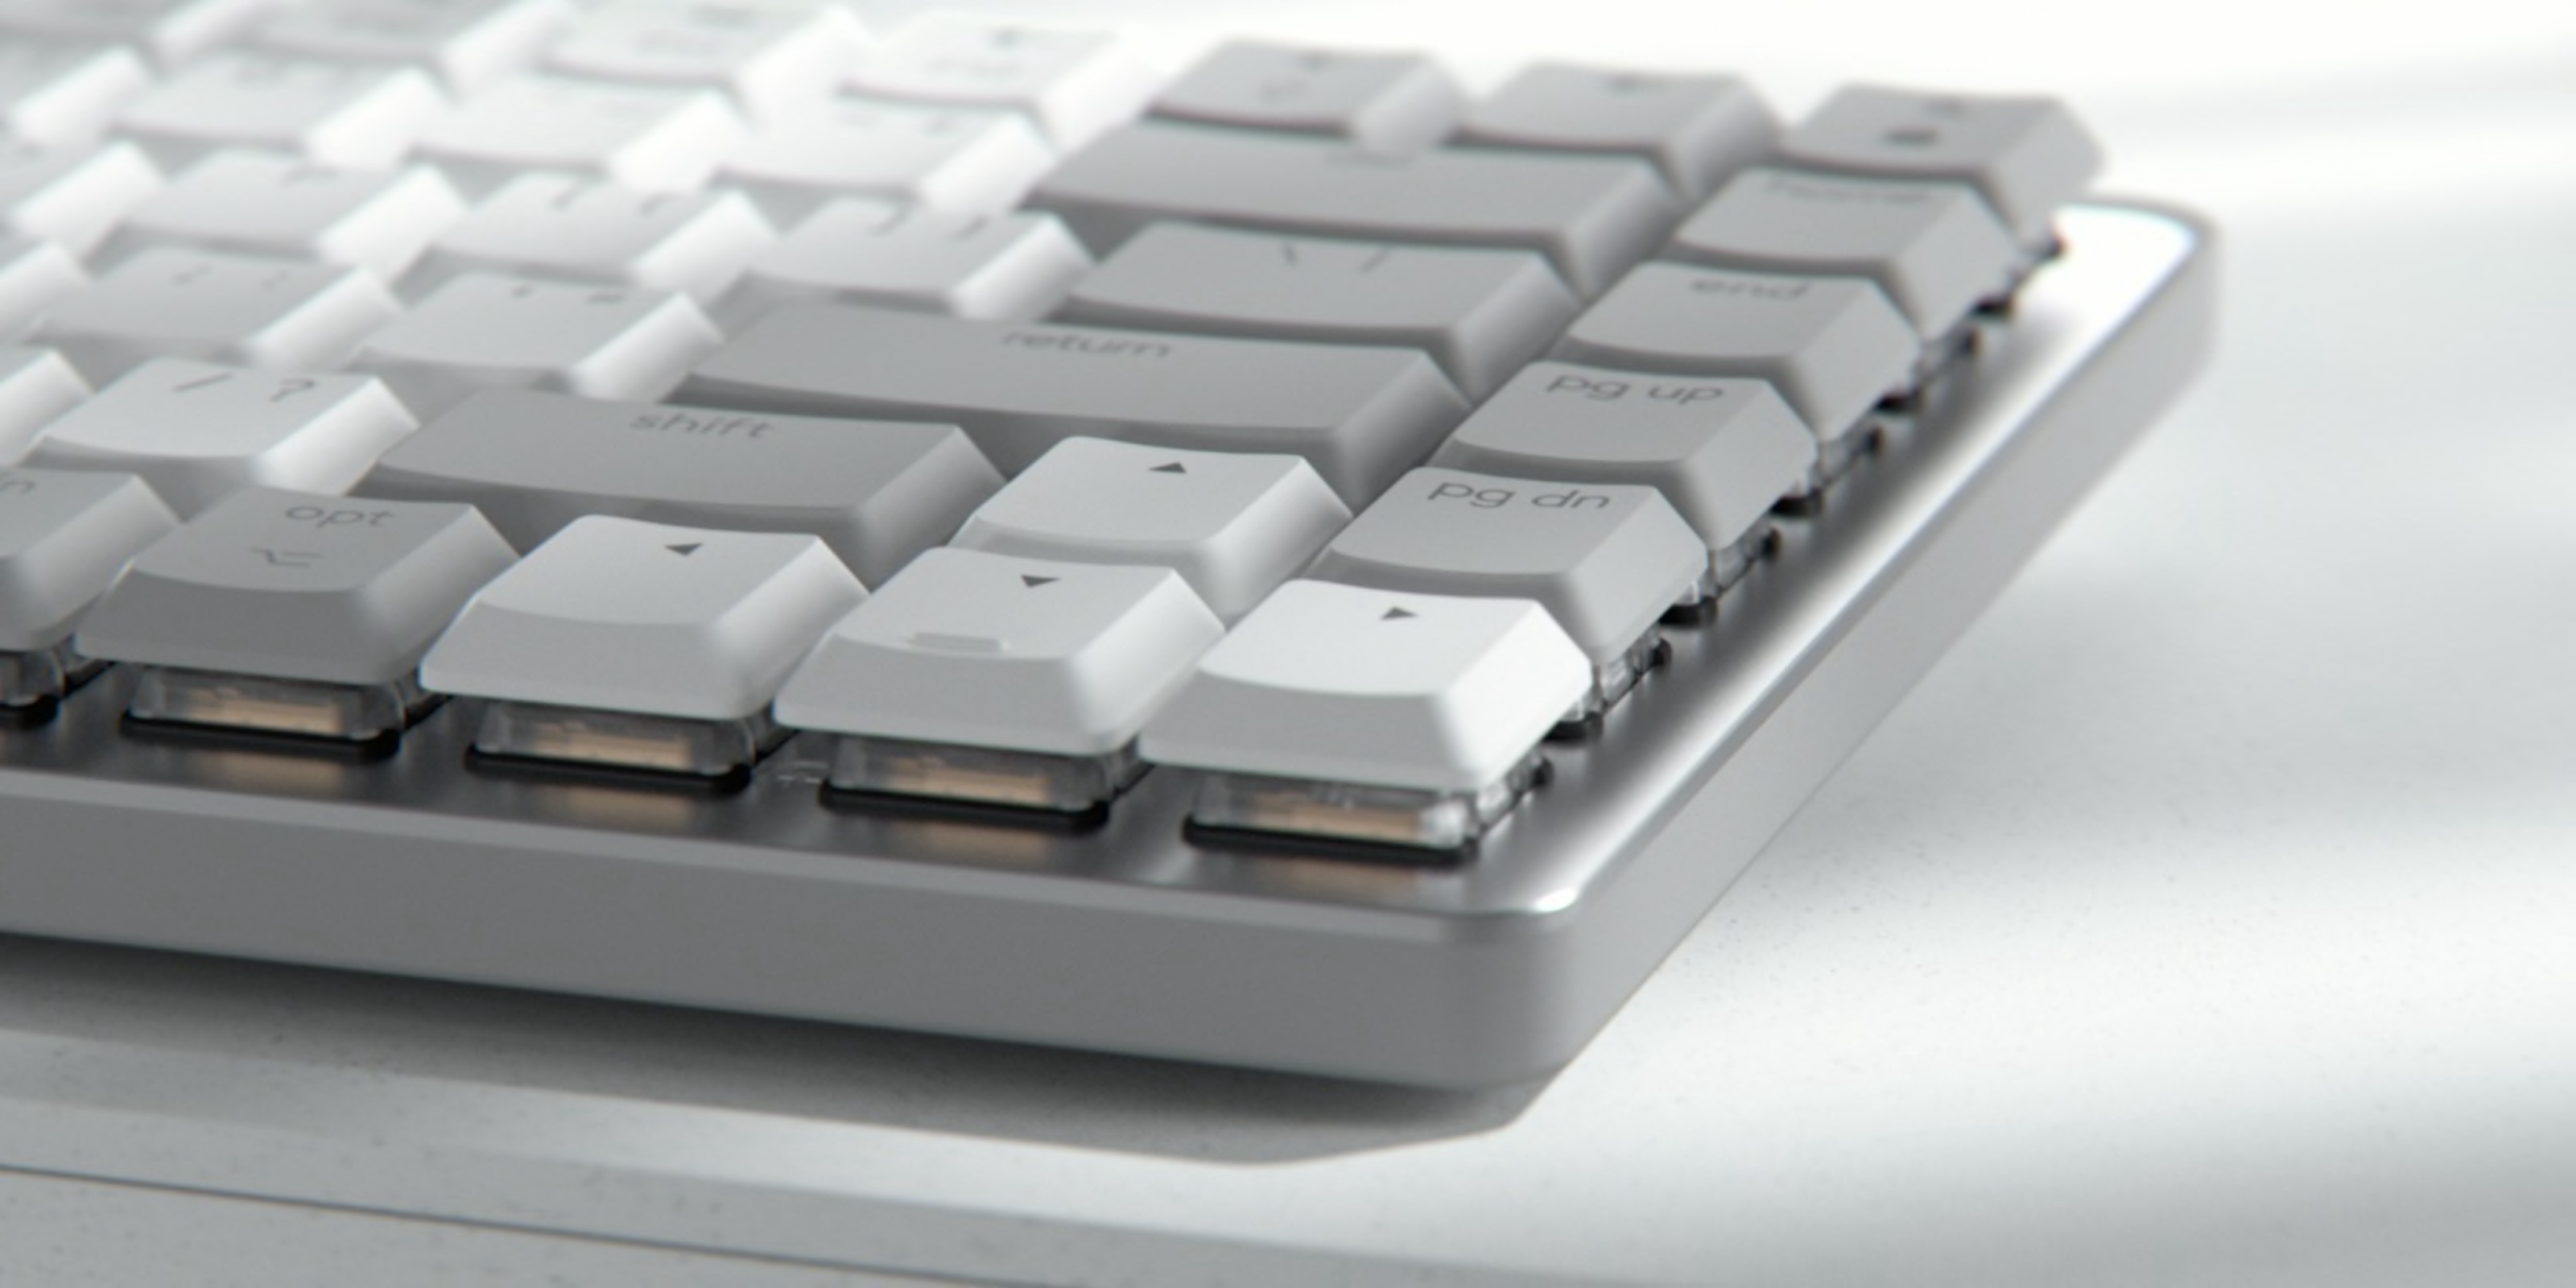 MX Mechanical Mini Wireless Keyboard for Mac | Logitech